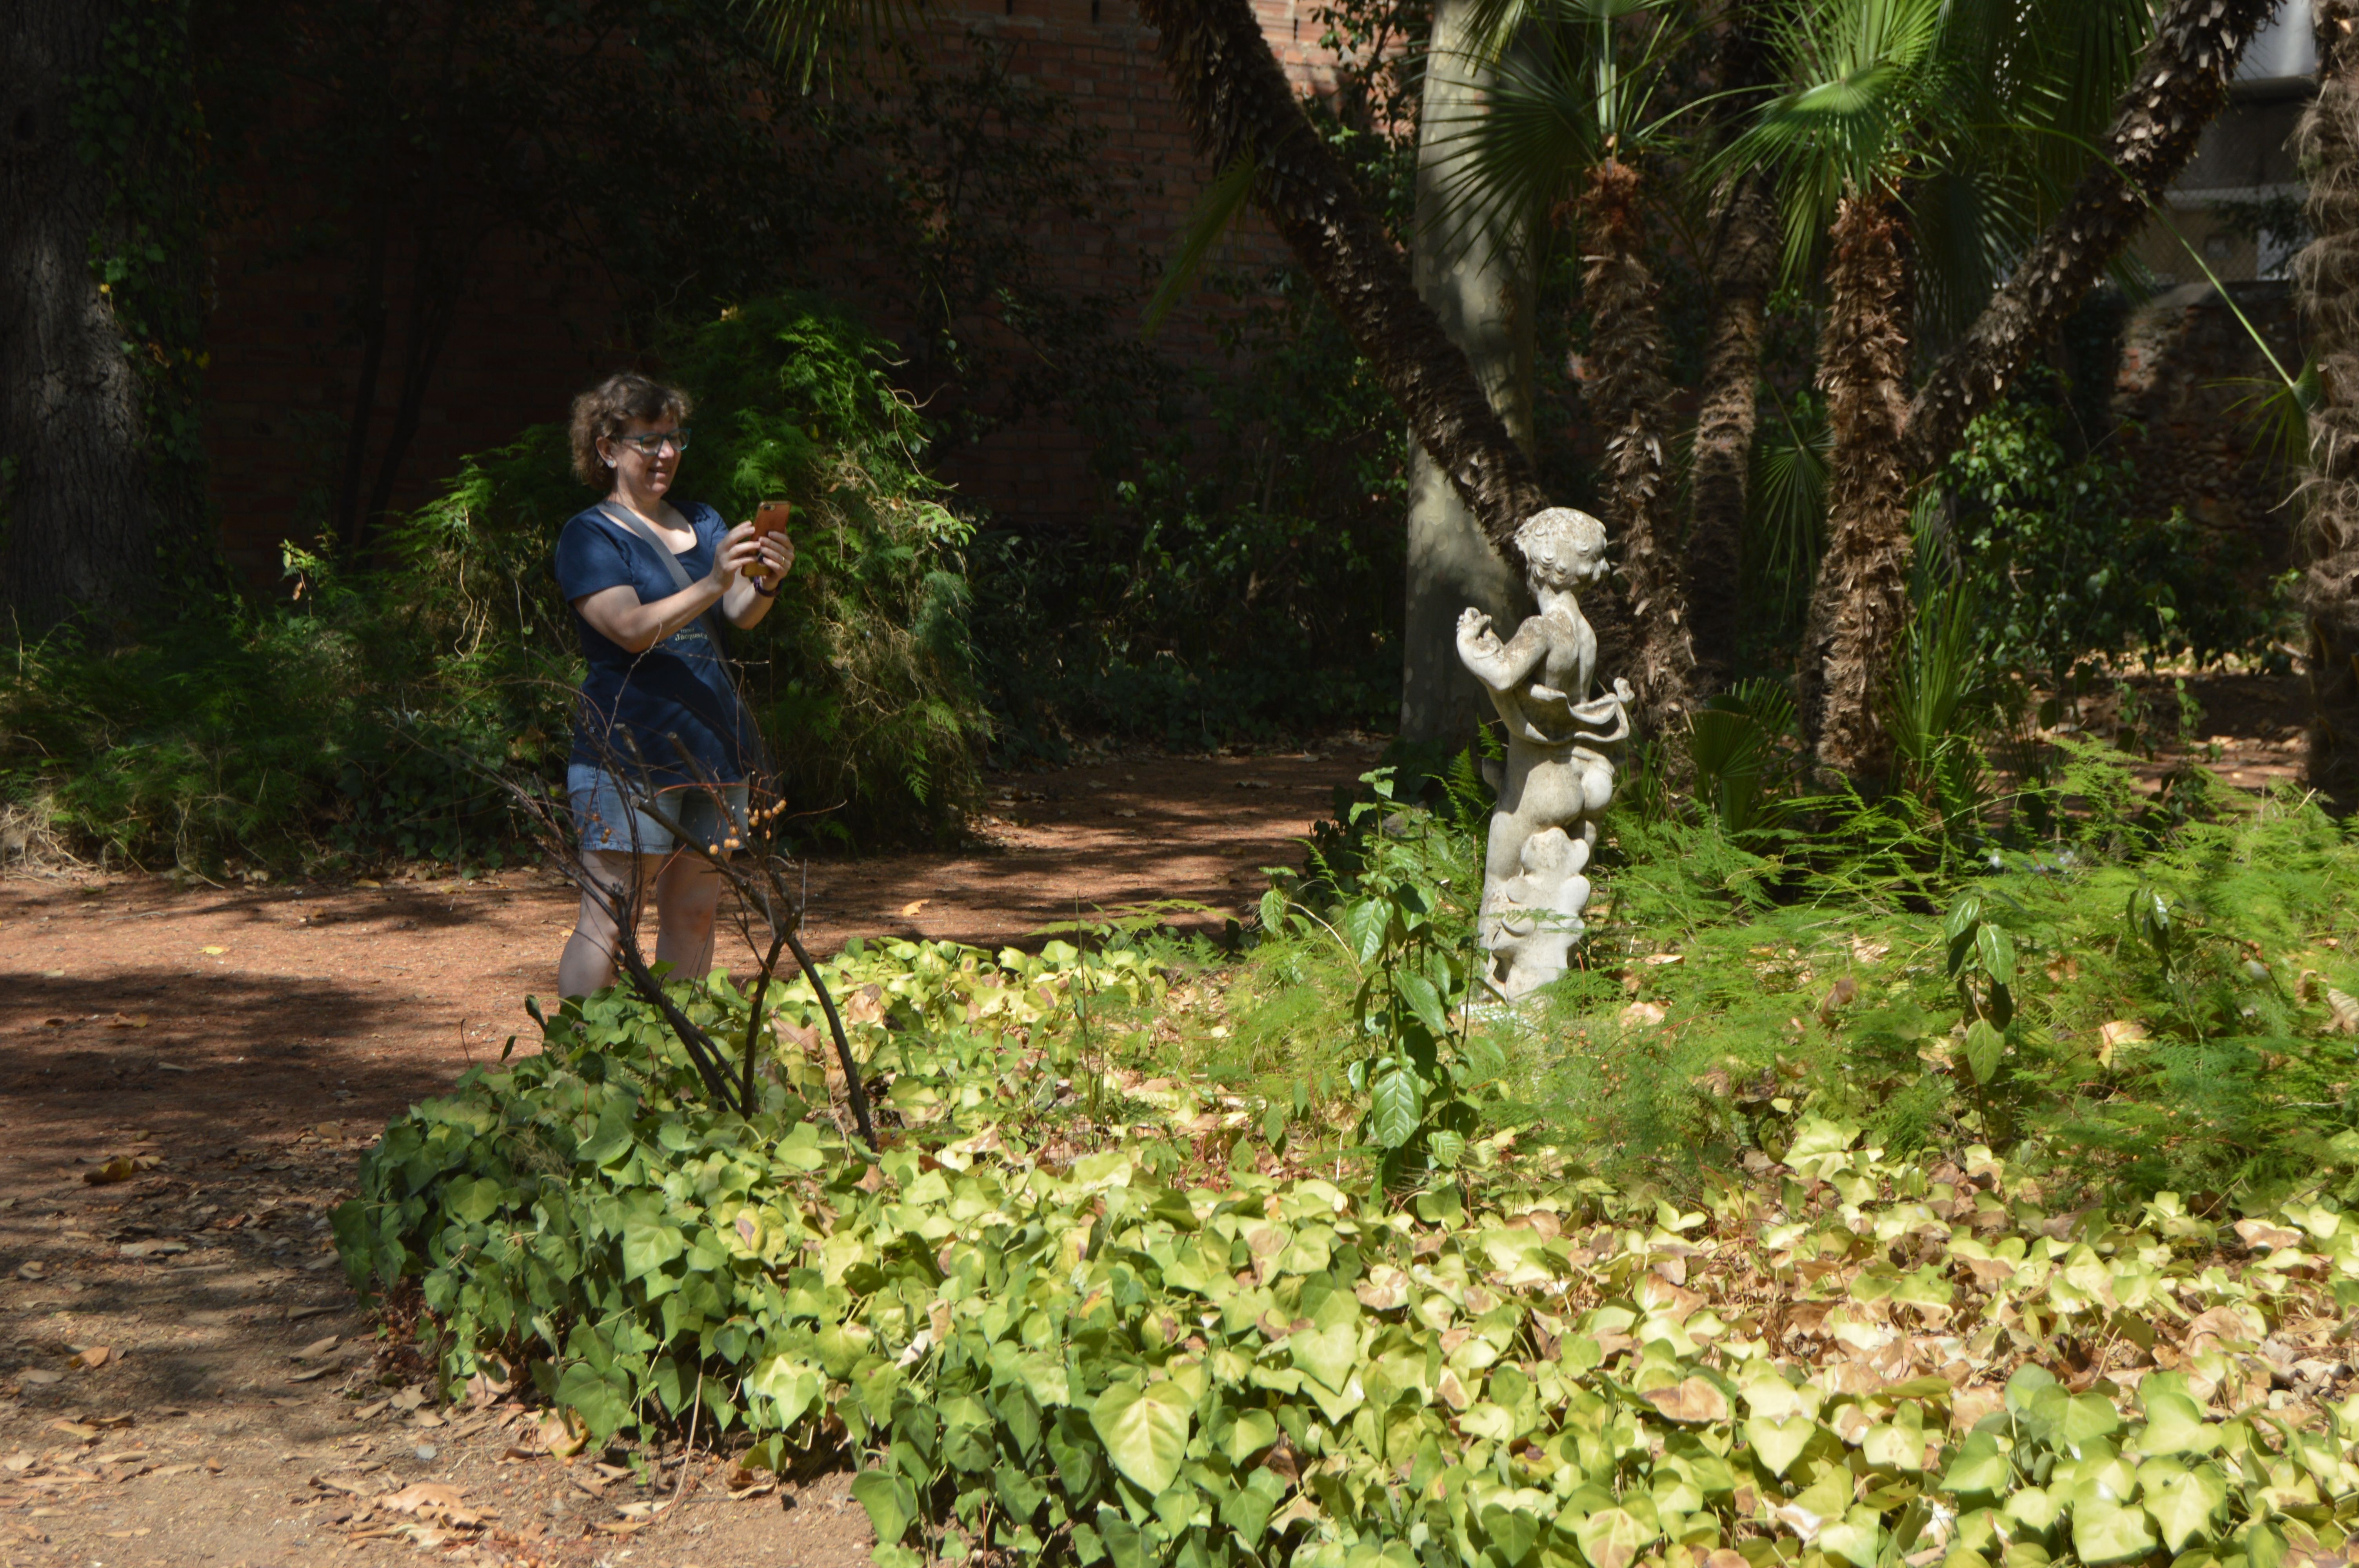 La visita continua als jardins de Can Llopis. FOTO: Nora Muñoz Otero